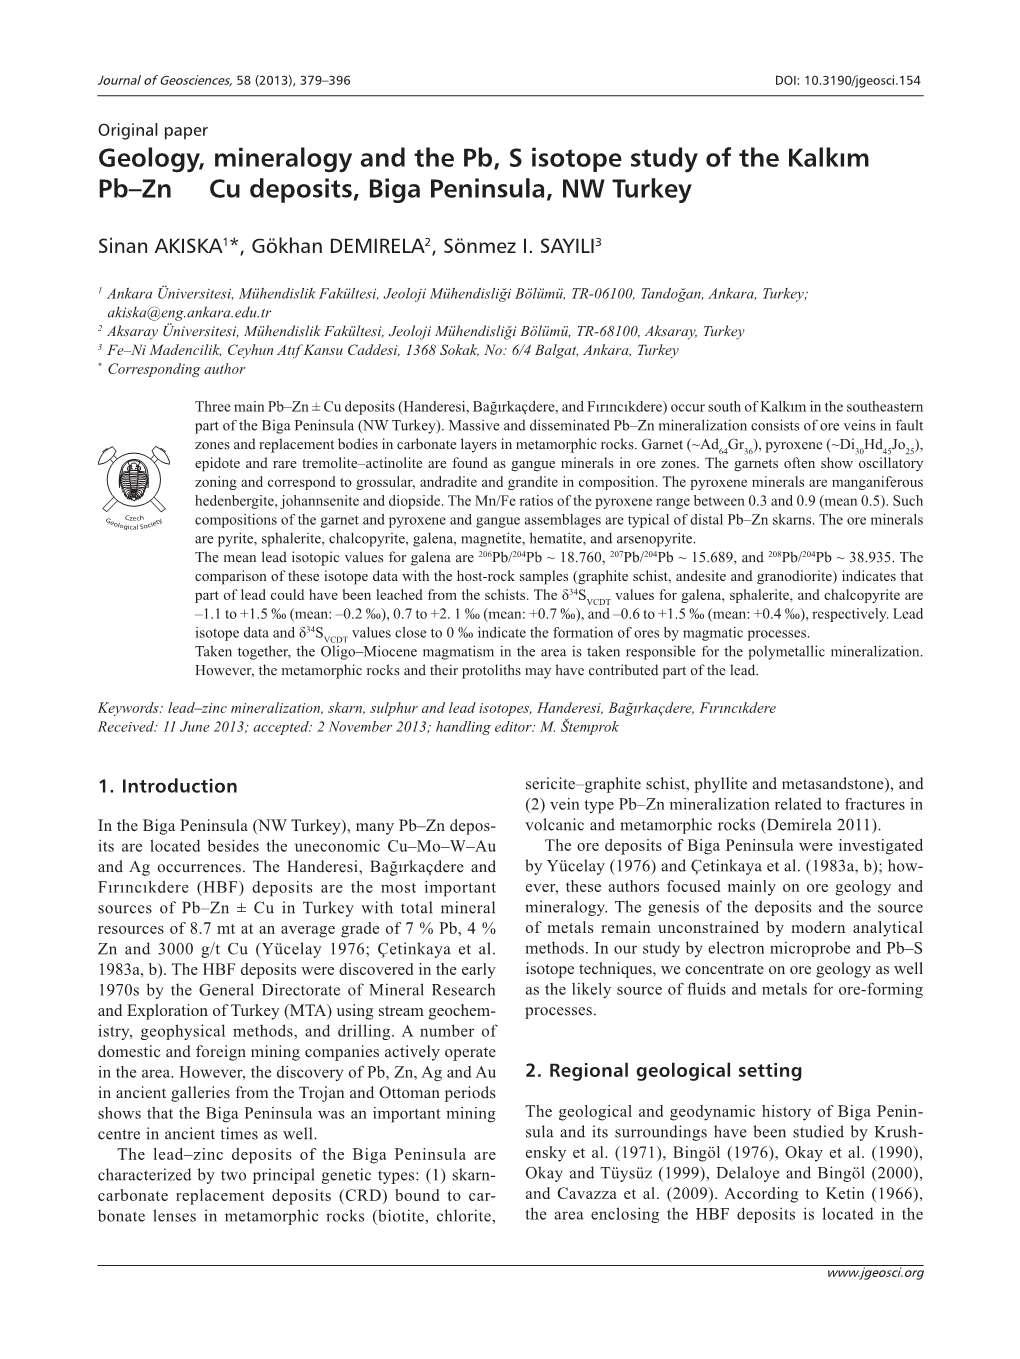 Geology, Mineralogy and the Pb, S Isotope Study of the Kalkım Pb–Zn ± Cu Deposits, Biga Peninsula, NW Turkey